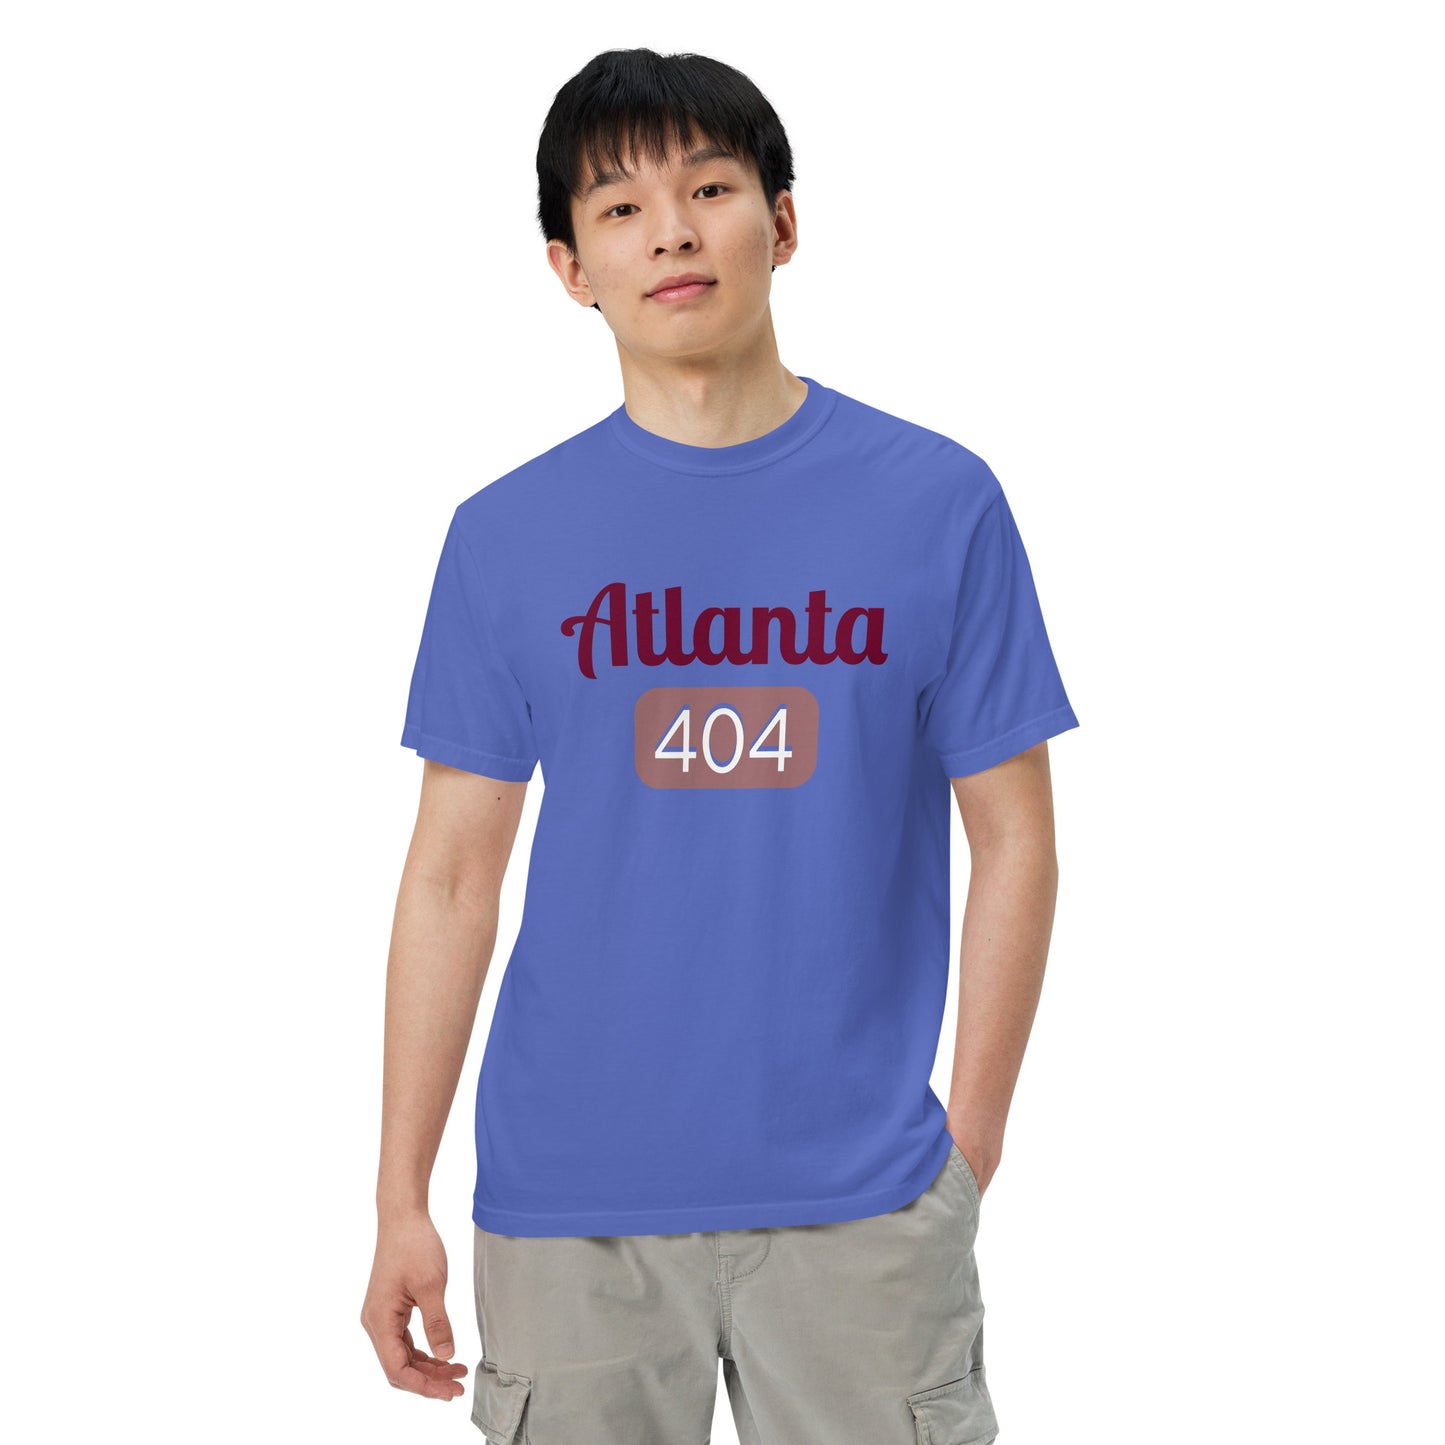 Atlanta 404 t-shirt in bright blue